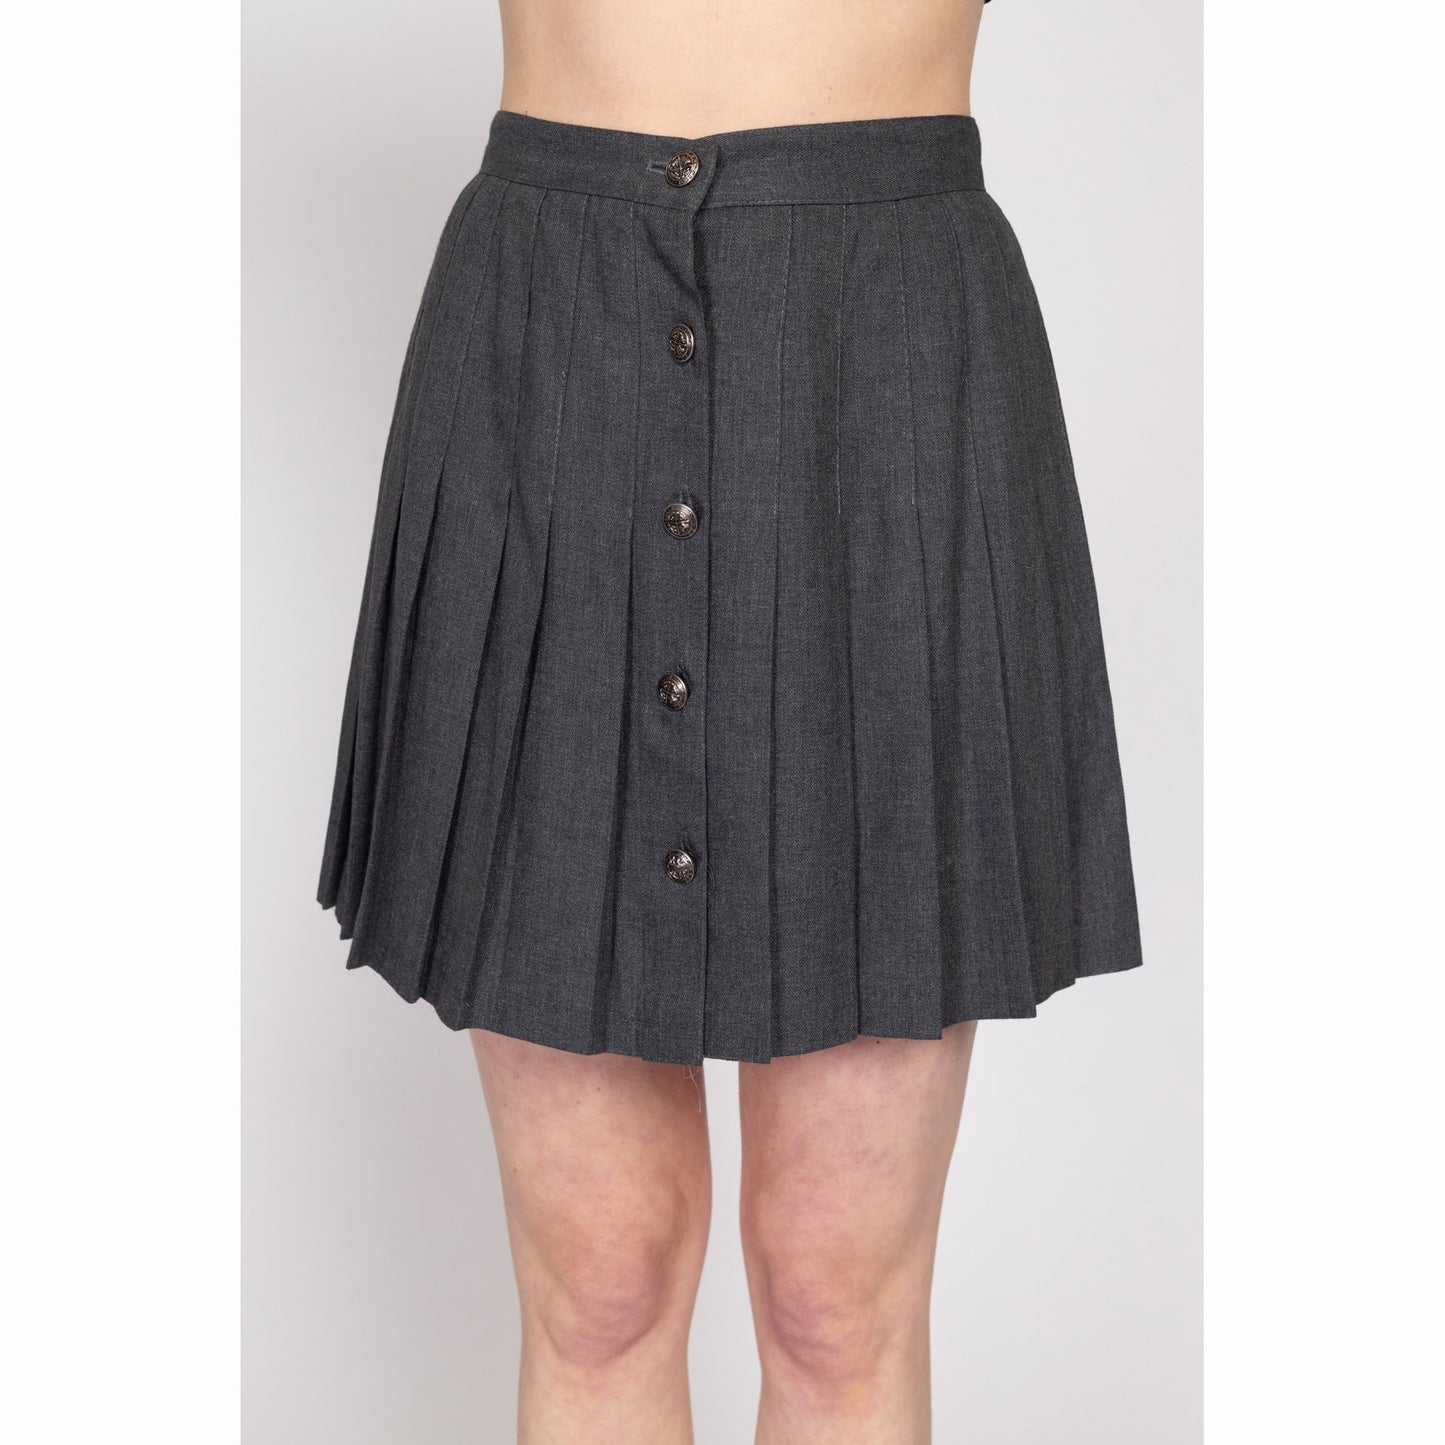 Small 90s Dark Grey Pleated Schoolgirl Skirt 27" | Vintage Minimalist Dark Academia Button Front High Waisted Mini Skirt